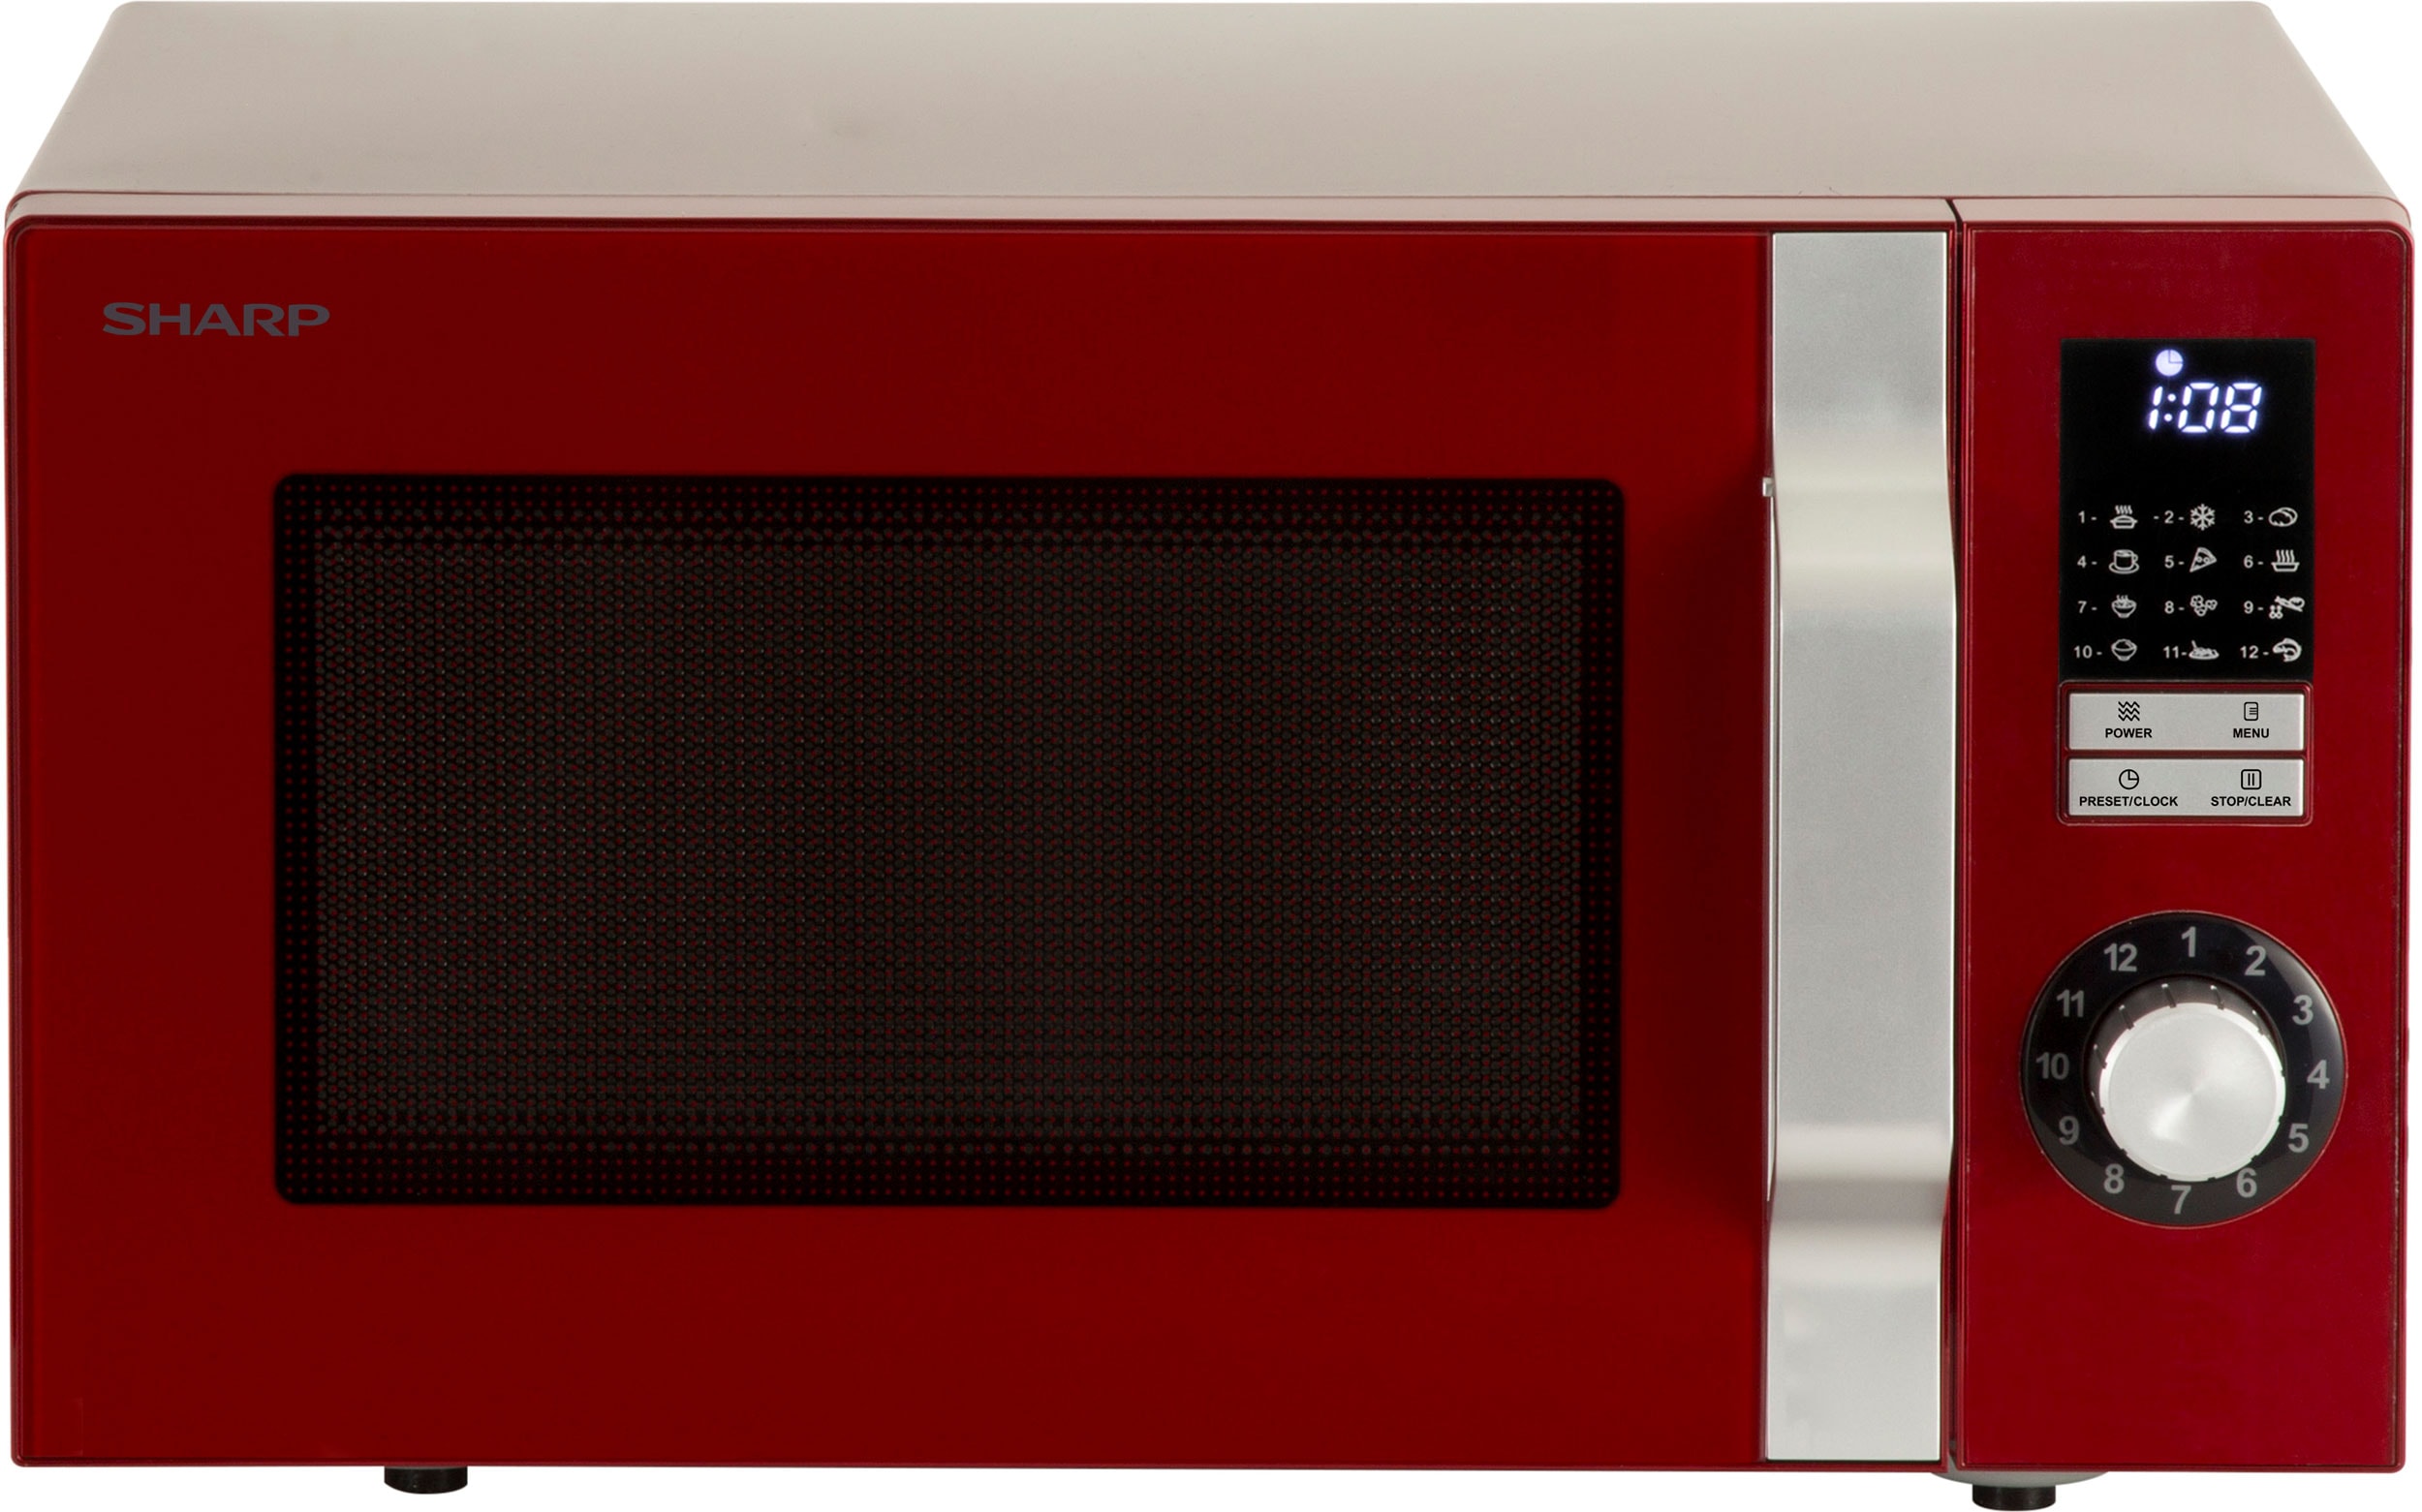 Comfee cmsro 20 di rd micro-ondes de style rétro vintage 20 l, 800 w,rouge  COMFEE Pas Cher 